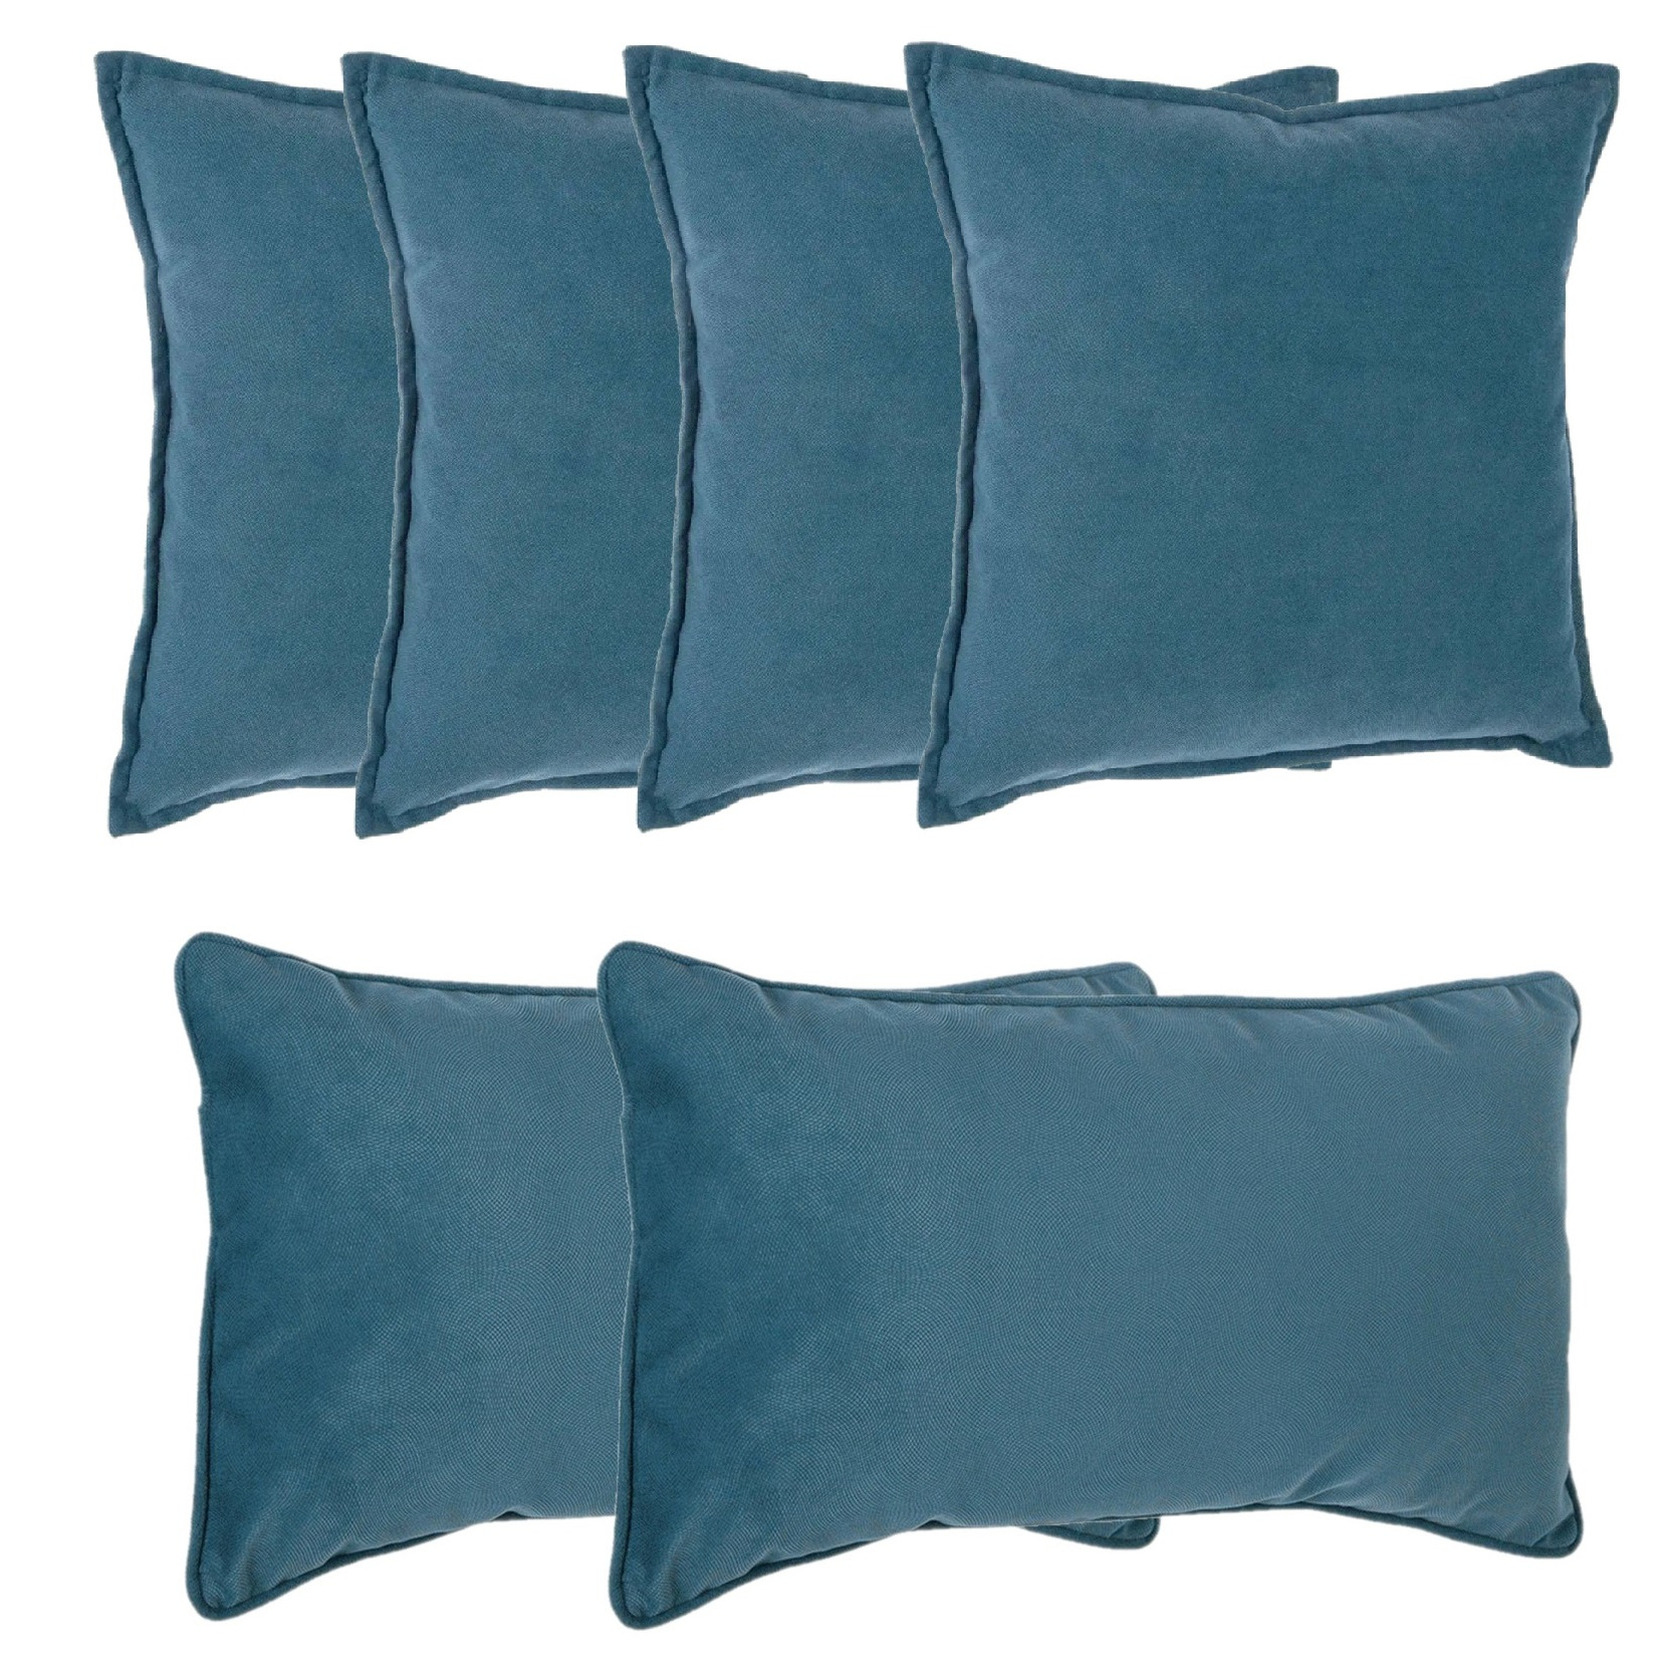 Bank-sierkussens huiskamer Sophia set 6x stuks Blauw polyester met rits In 2 formaten